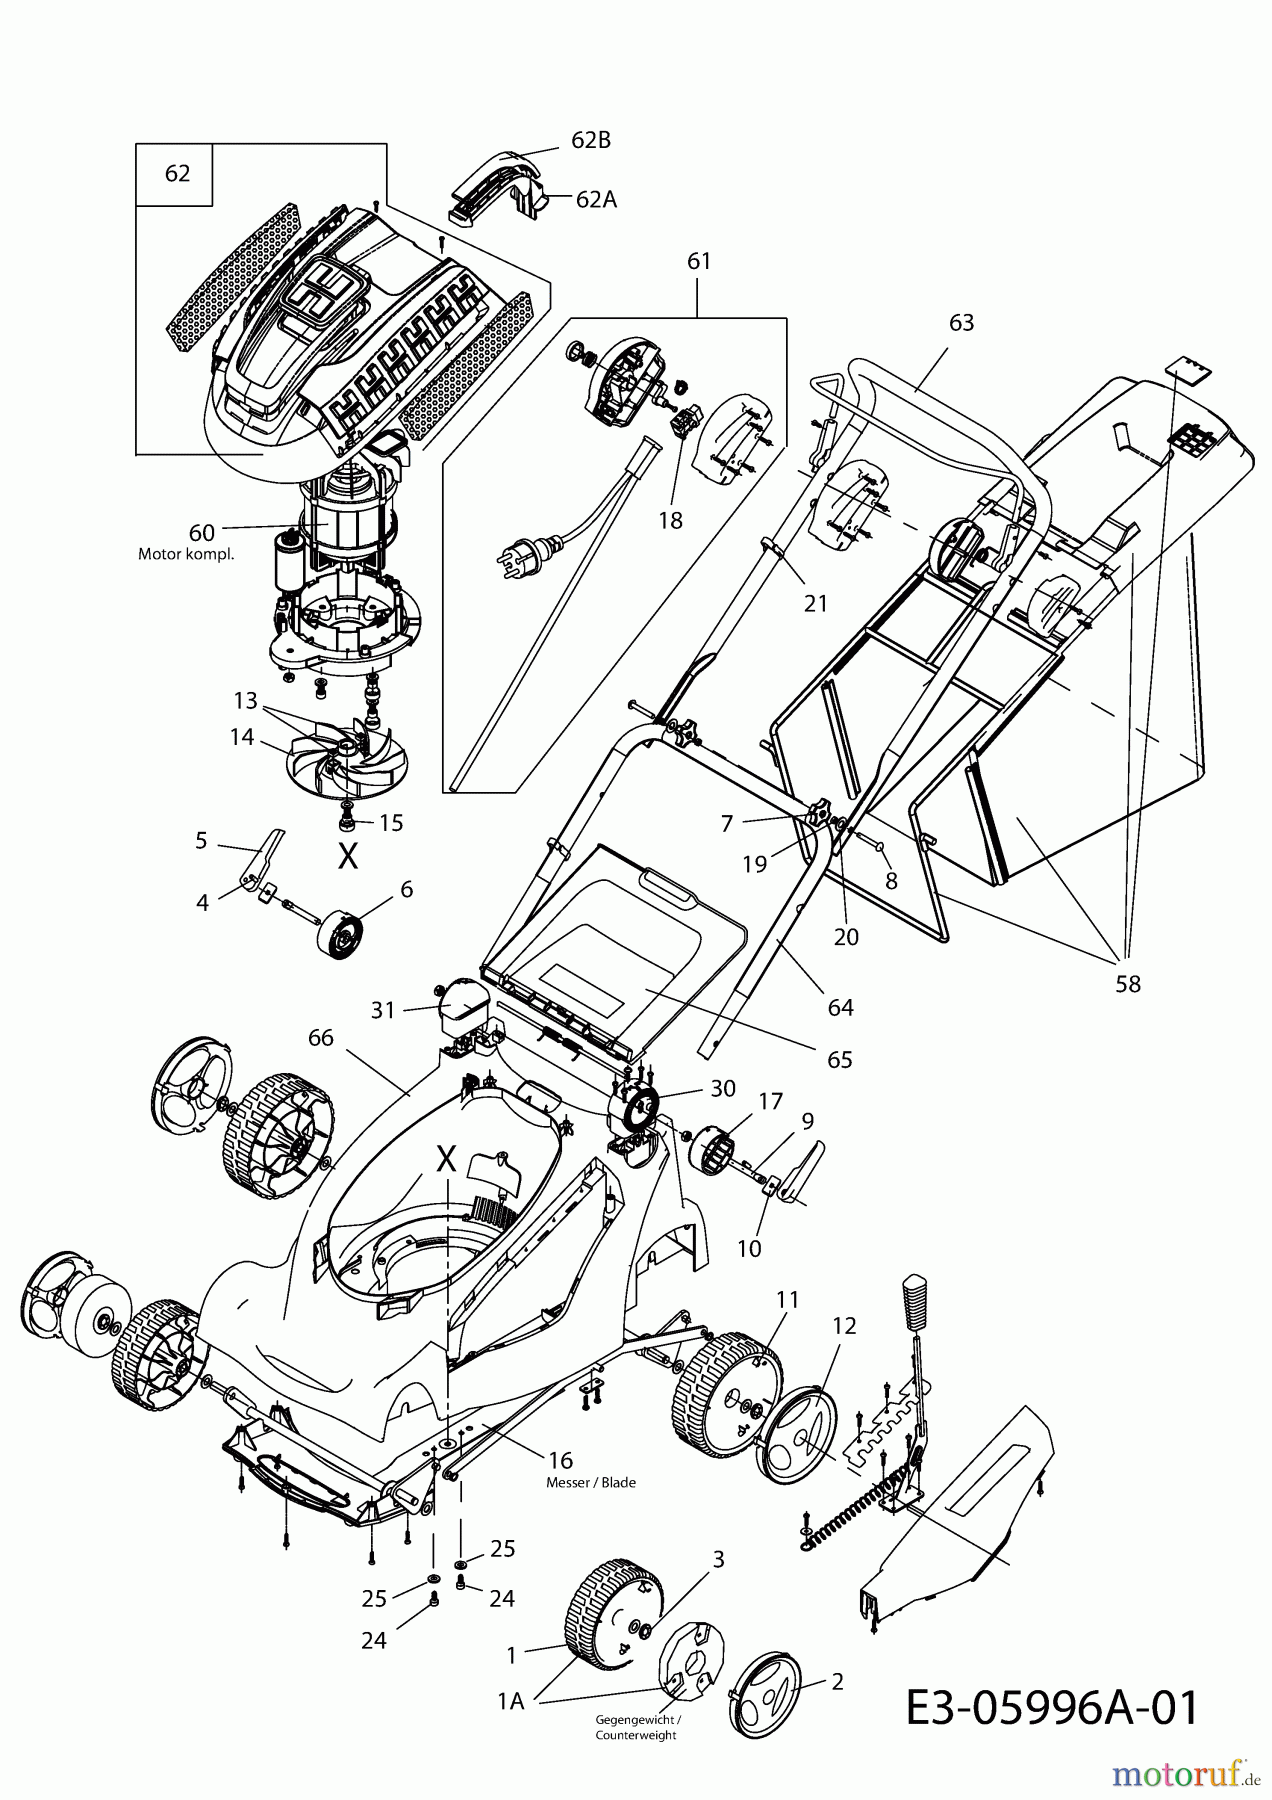  Plantiflor Electric mower 1842 ER 18ACE4L2601  (2013) Basic machine